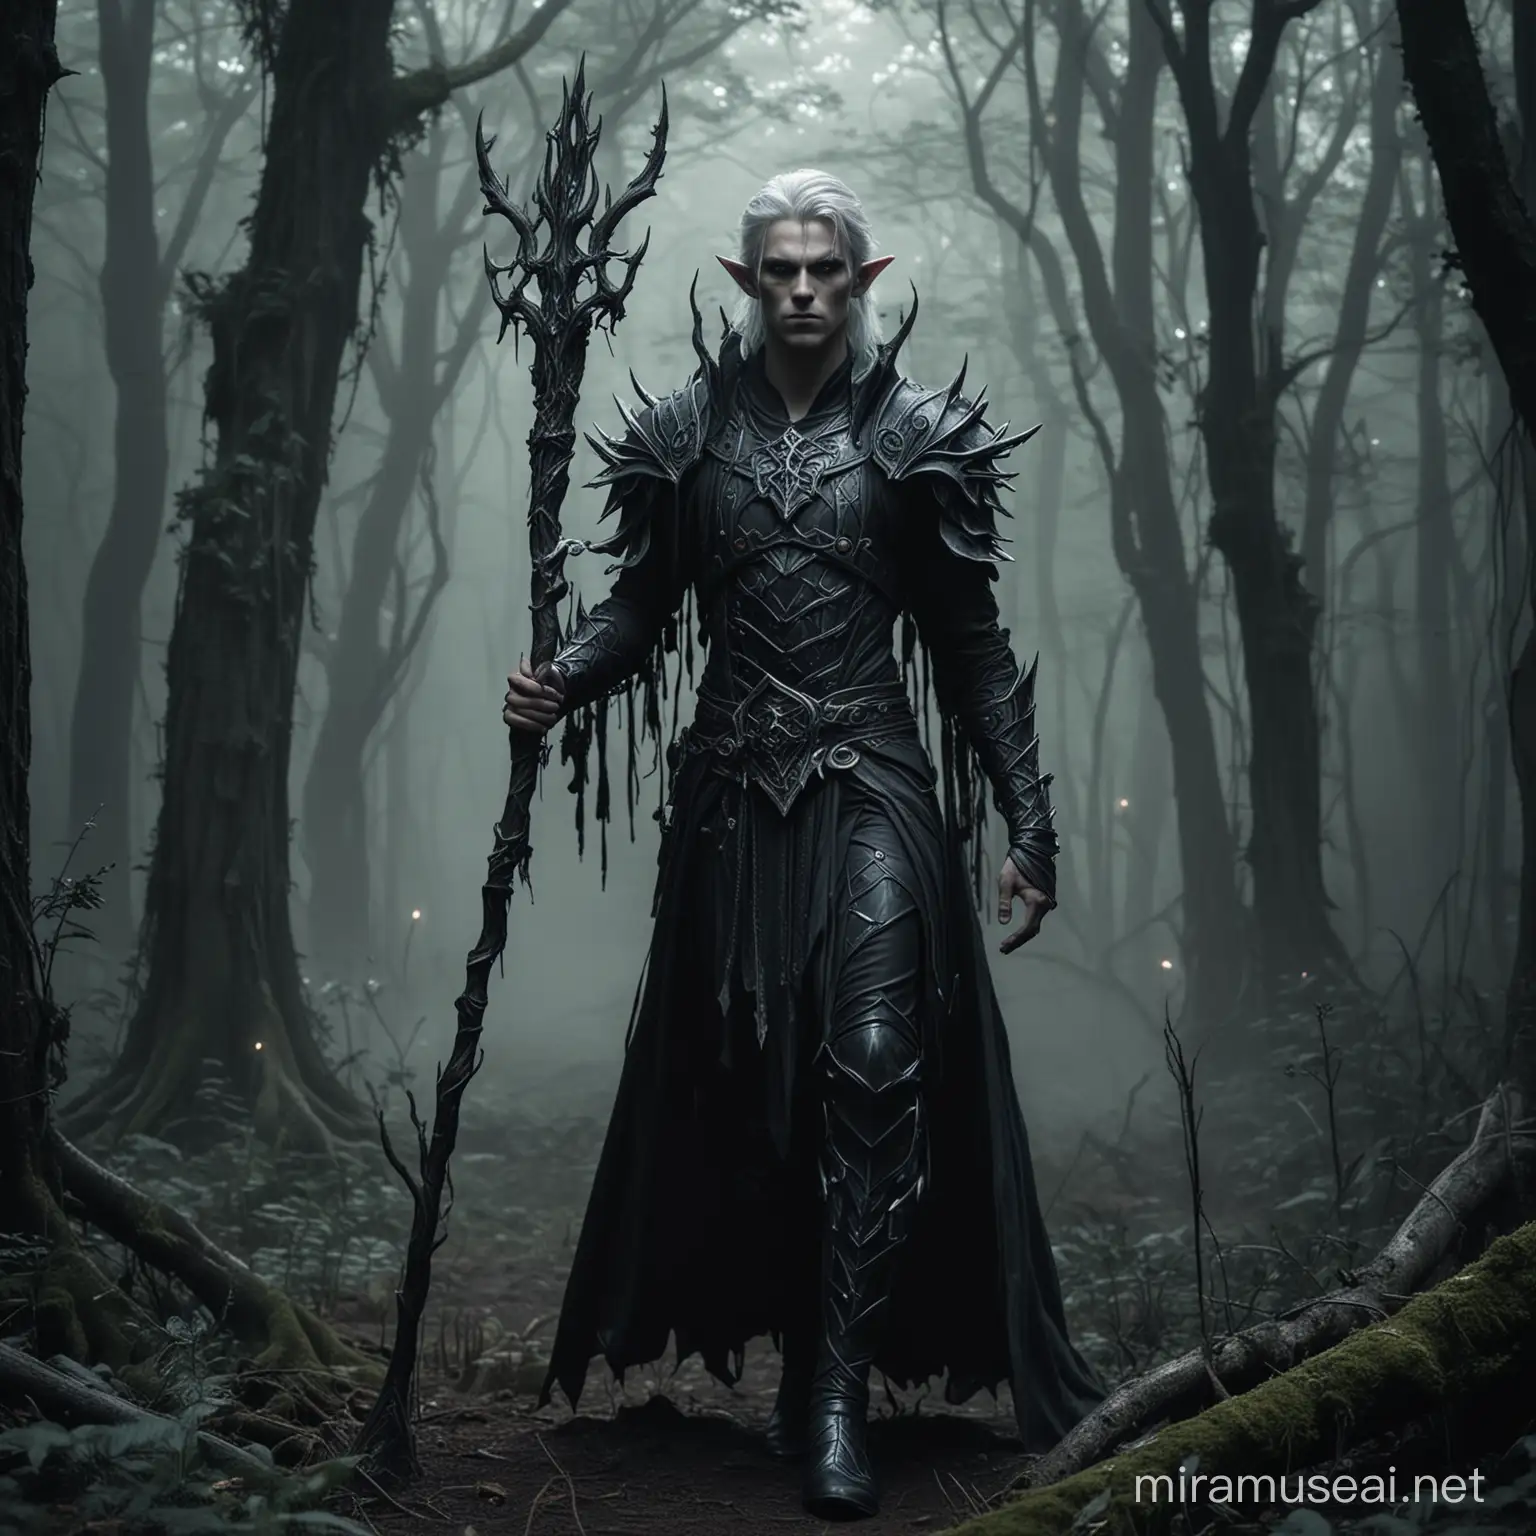 Mystical Male Elf Banshee Summoning Dark Energies in Enchanted Forest